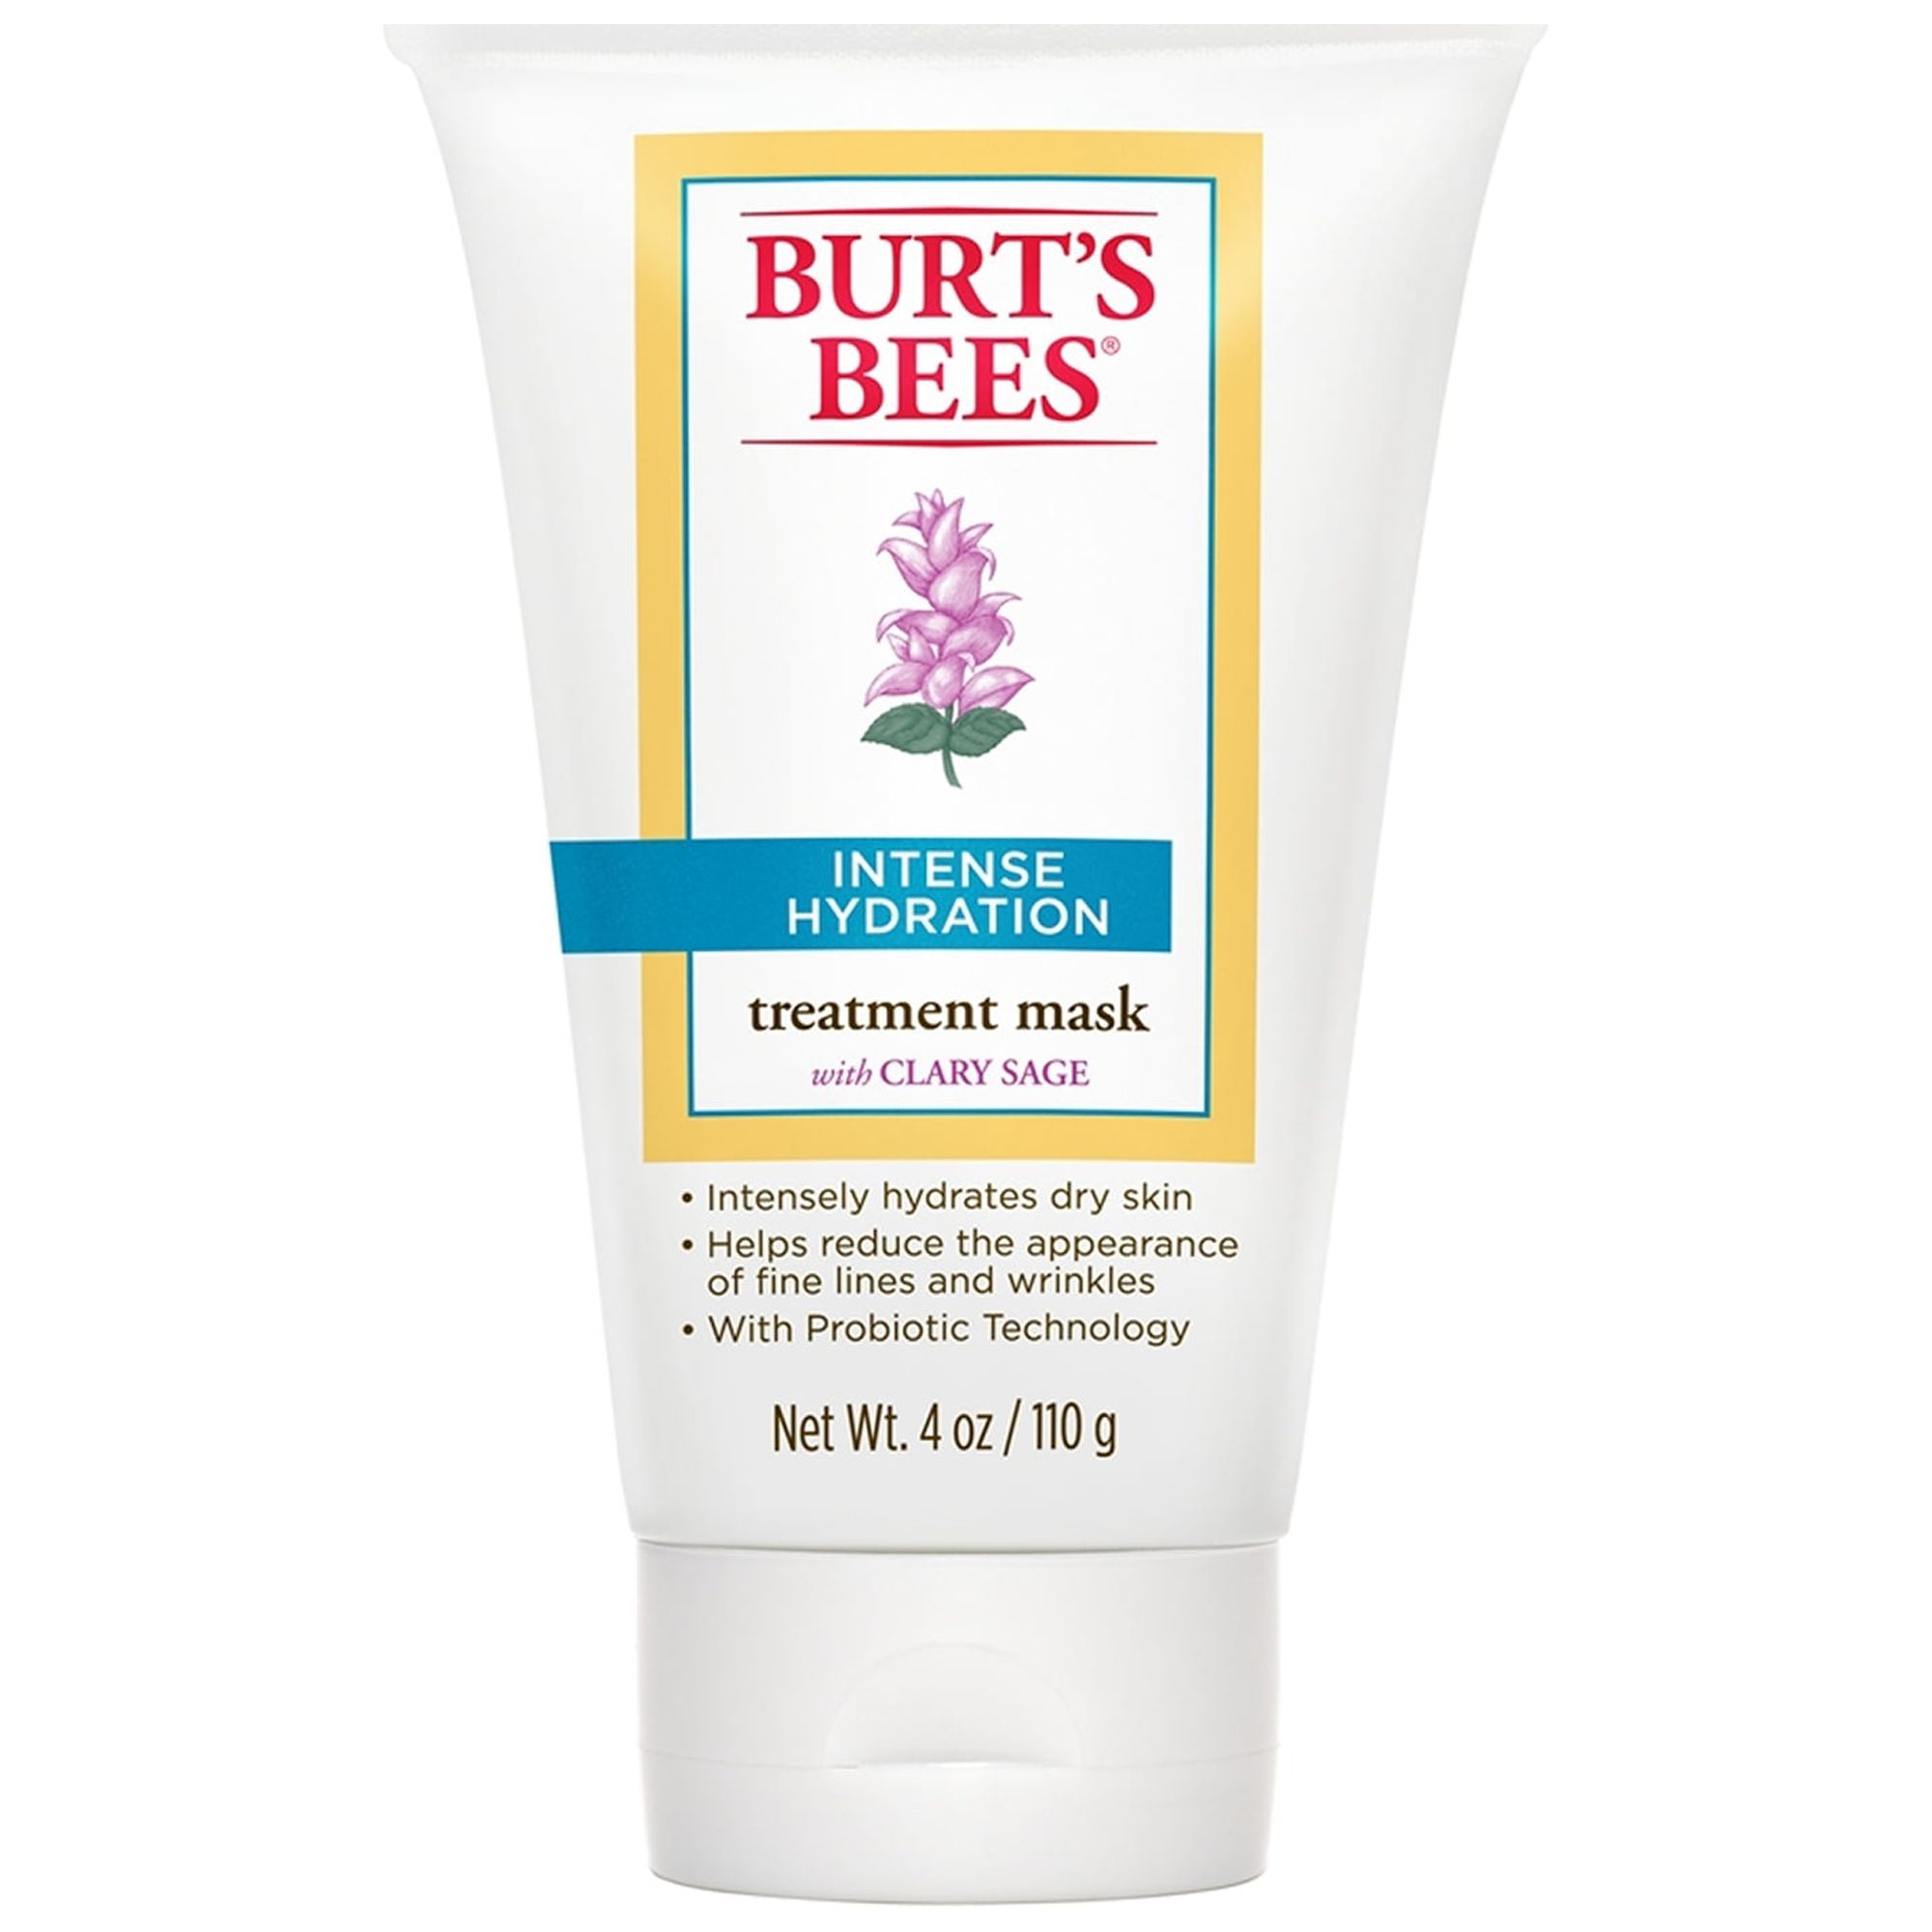 Burt's Bees Intense Hydration Treatment Mask, 4 oz - image 1 of 3